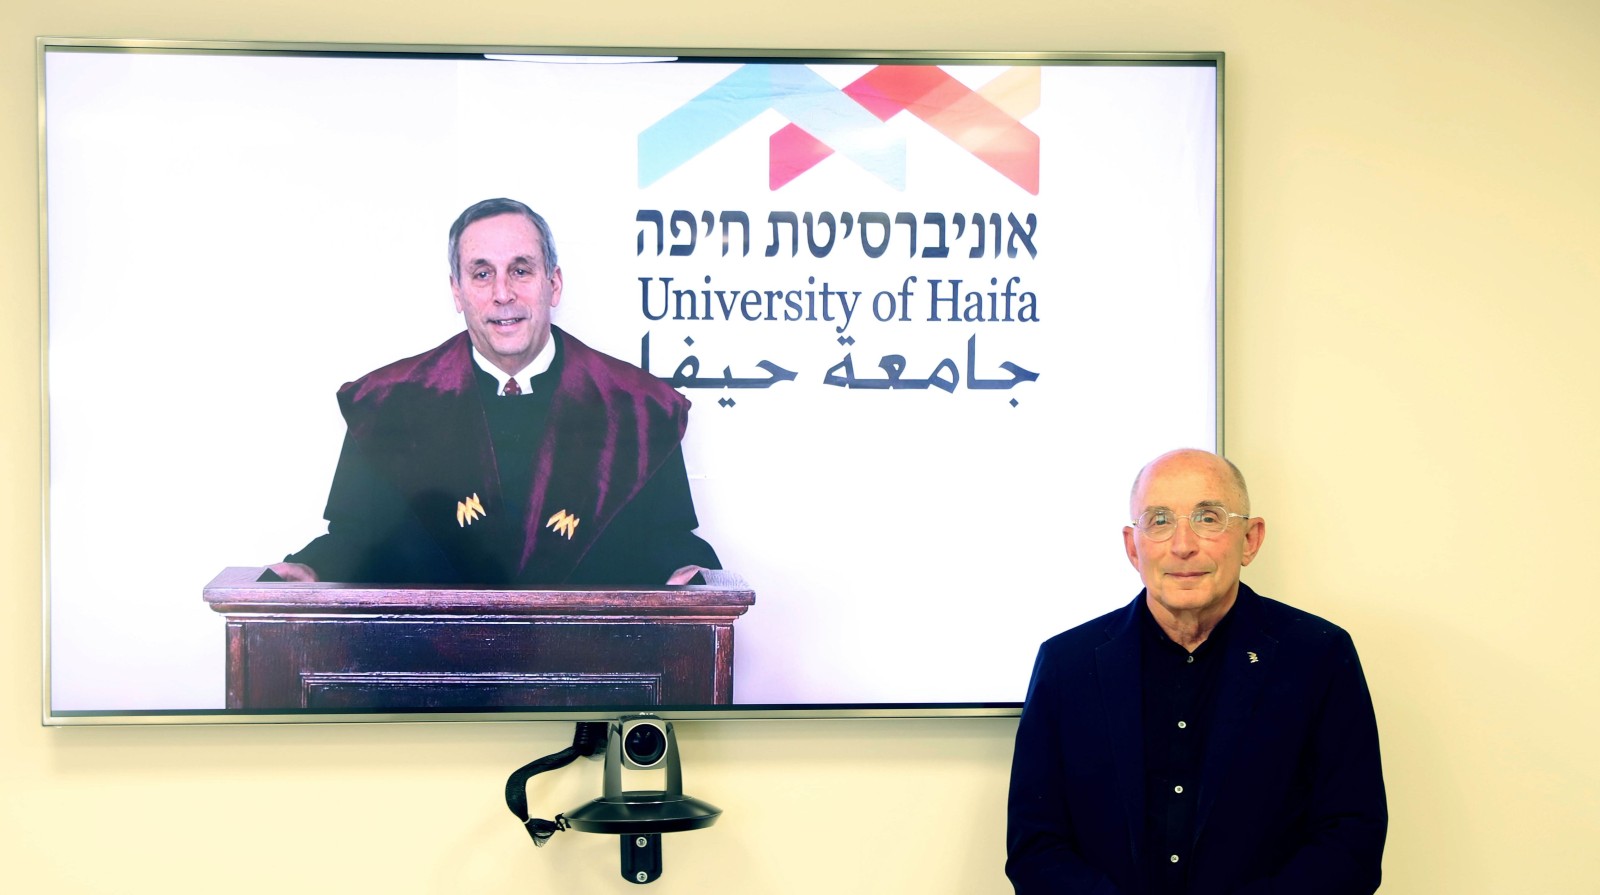 Harvard President Lawrence Bacow receiving an honorary doctorate from the University of Haifa President Ron Robin. Photo courtesy of University of Haifa